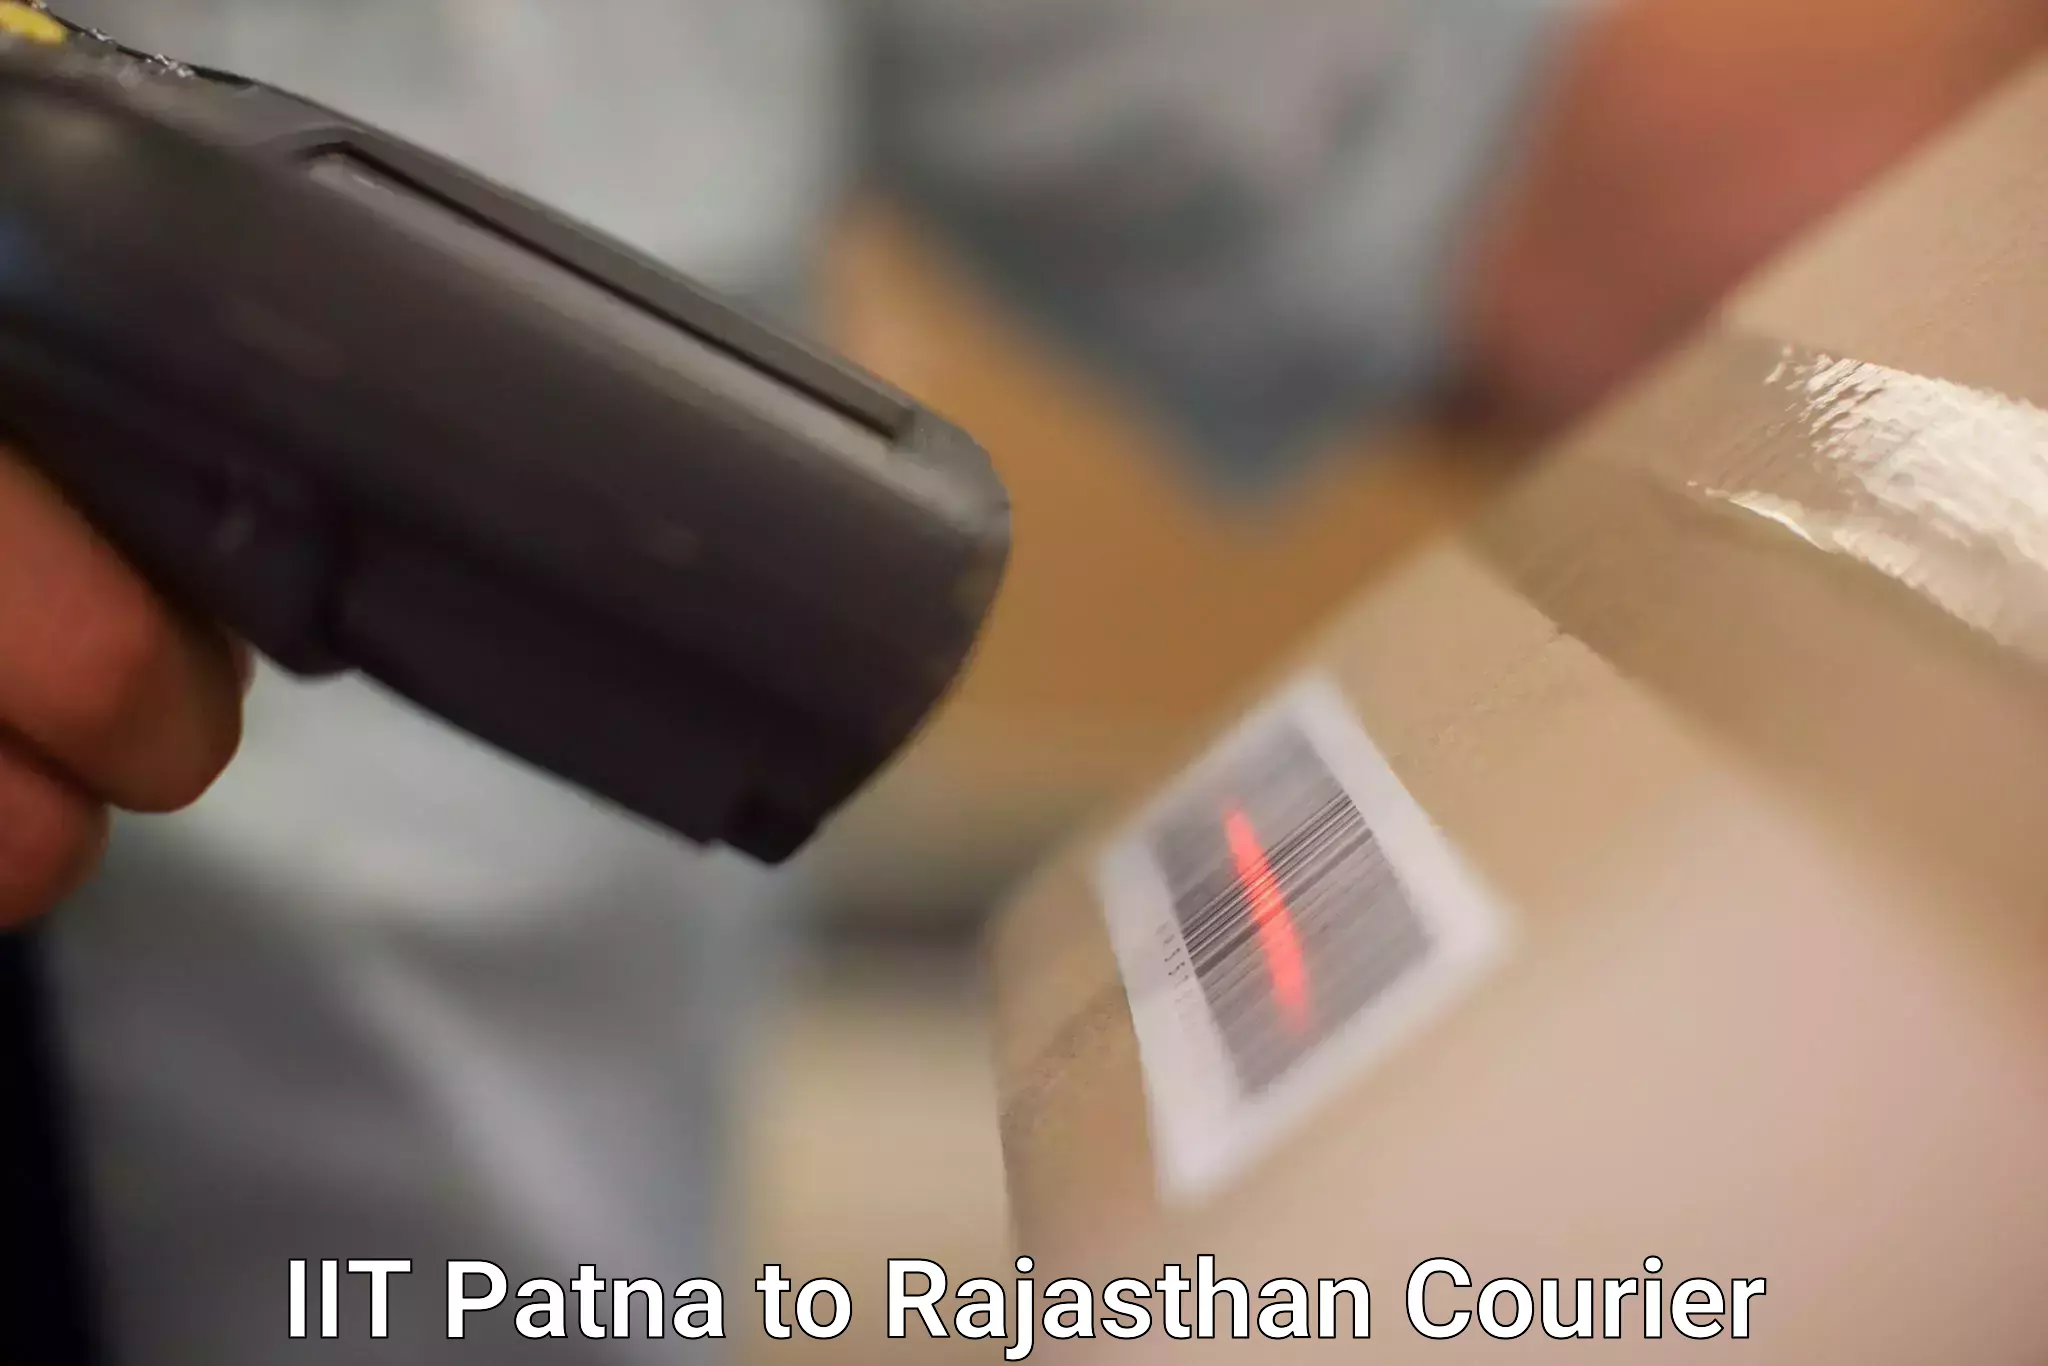 Courier service comparison in IIT Patna to Shahpura Jaipur